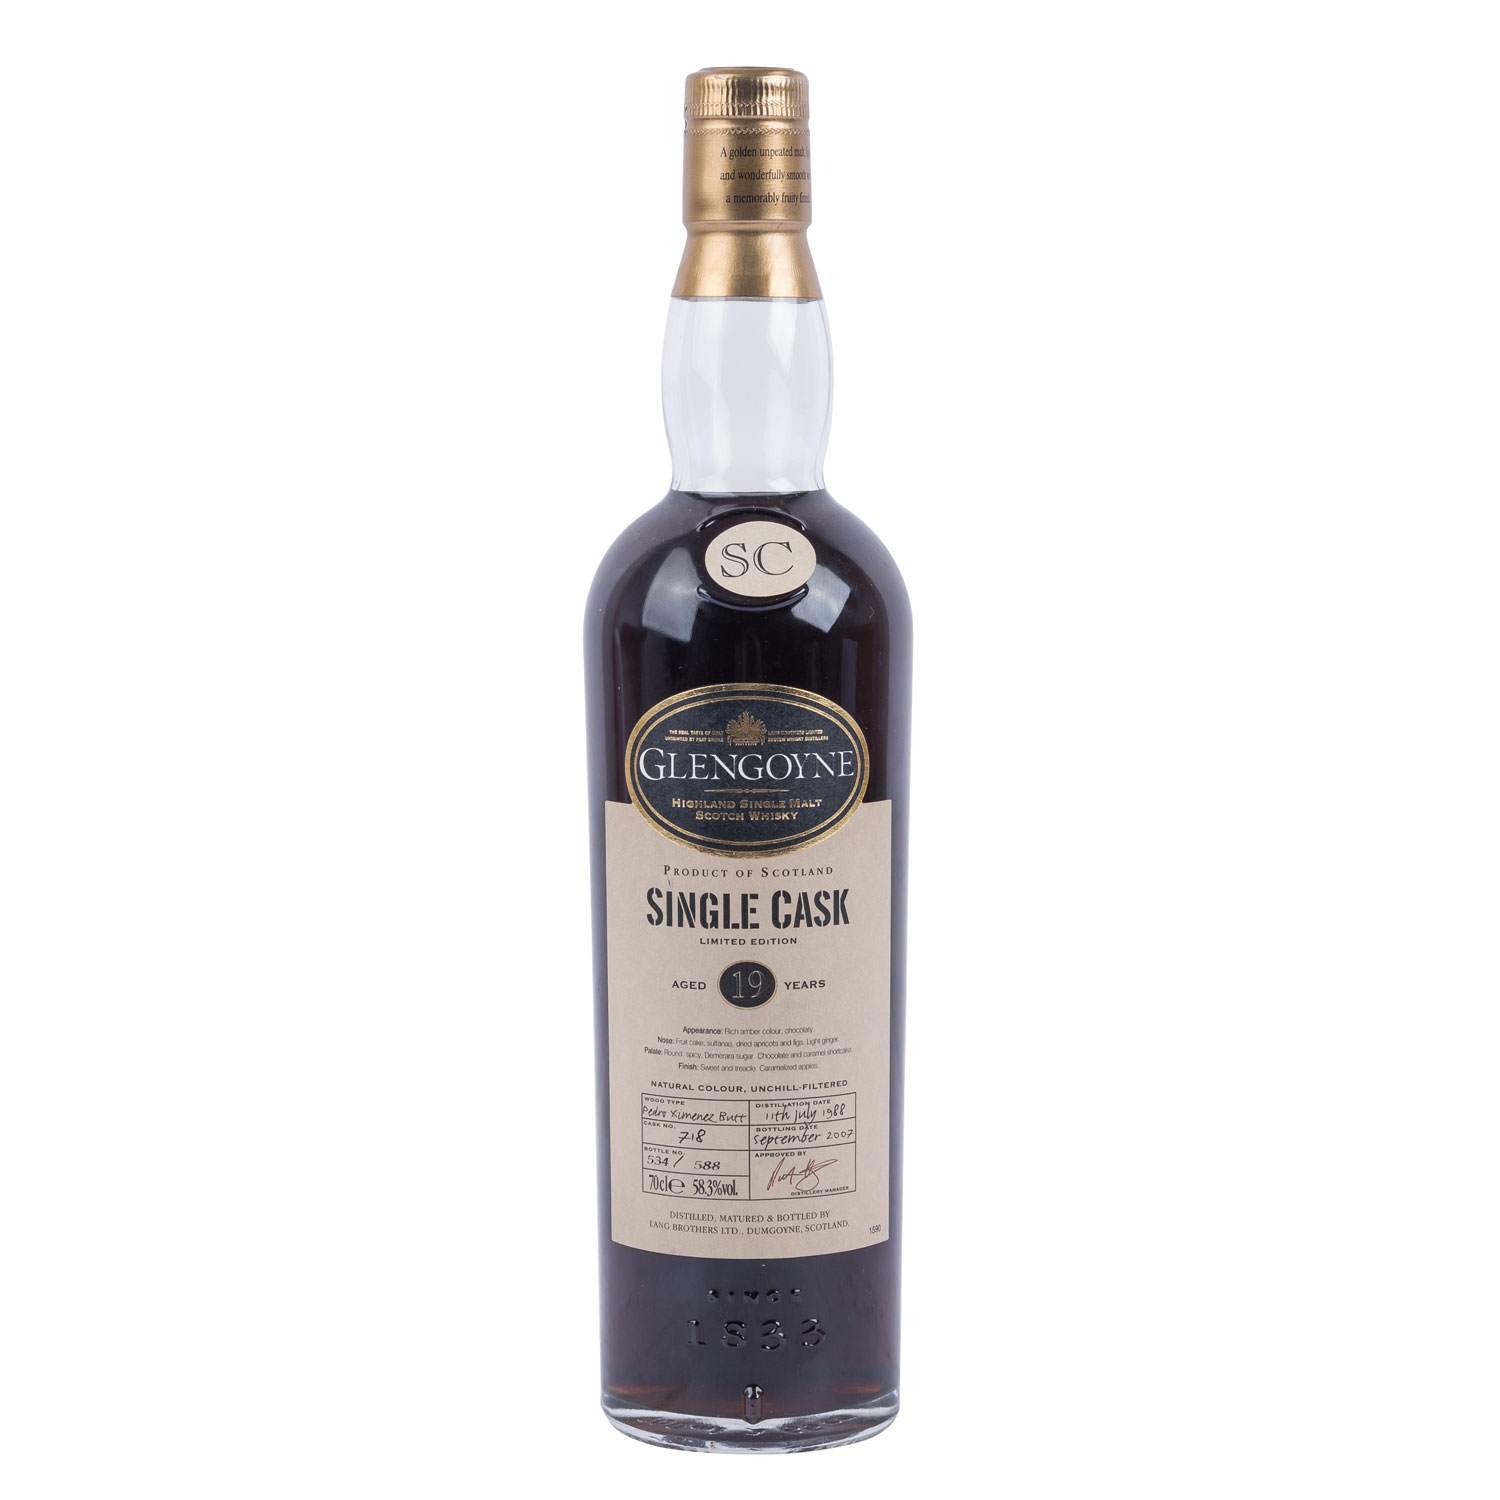 GLENGOYNE Single Malt Scotch Whisky 'Aged 19 Years', 2007